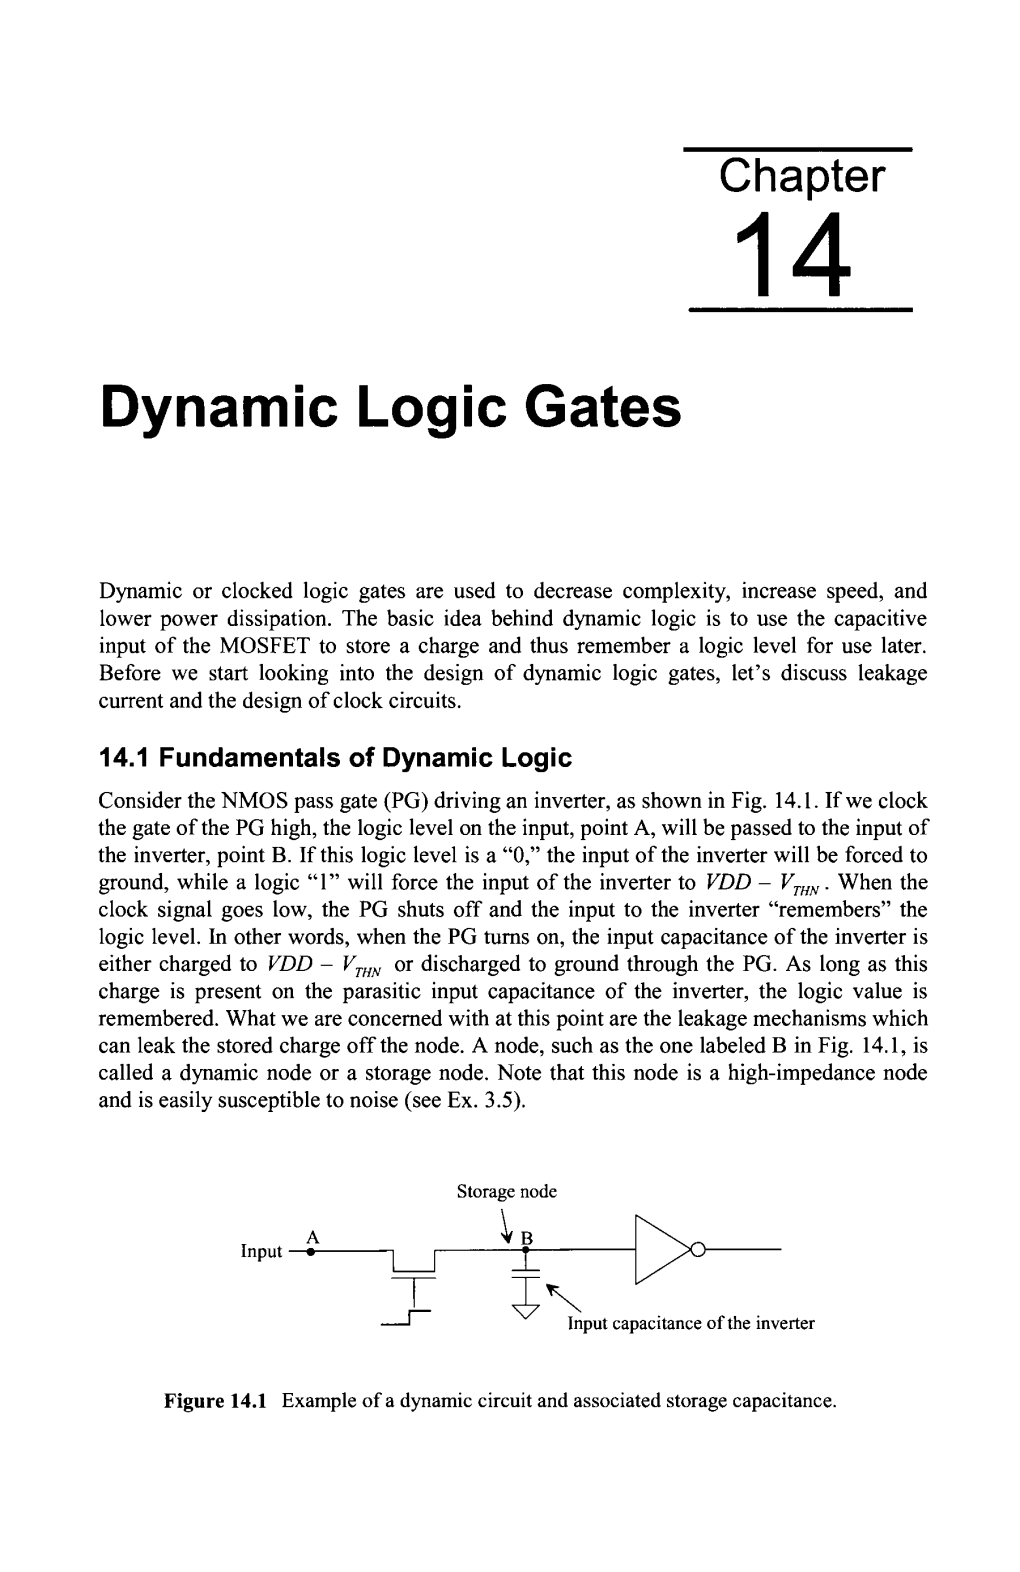 Dynamic Logic Gates